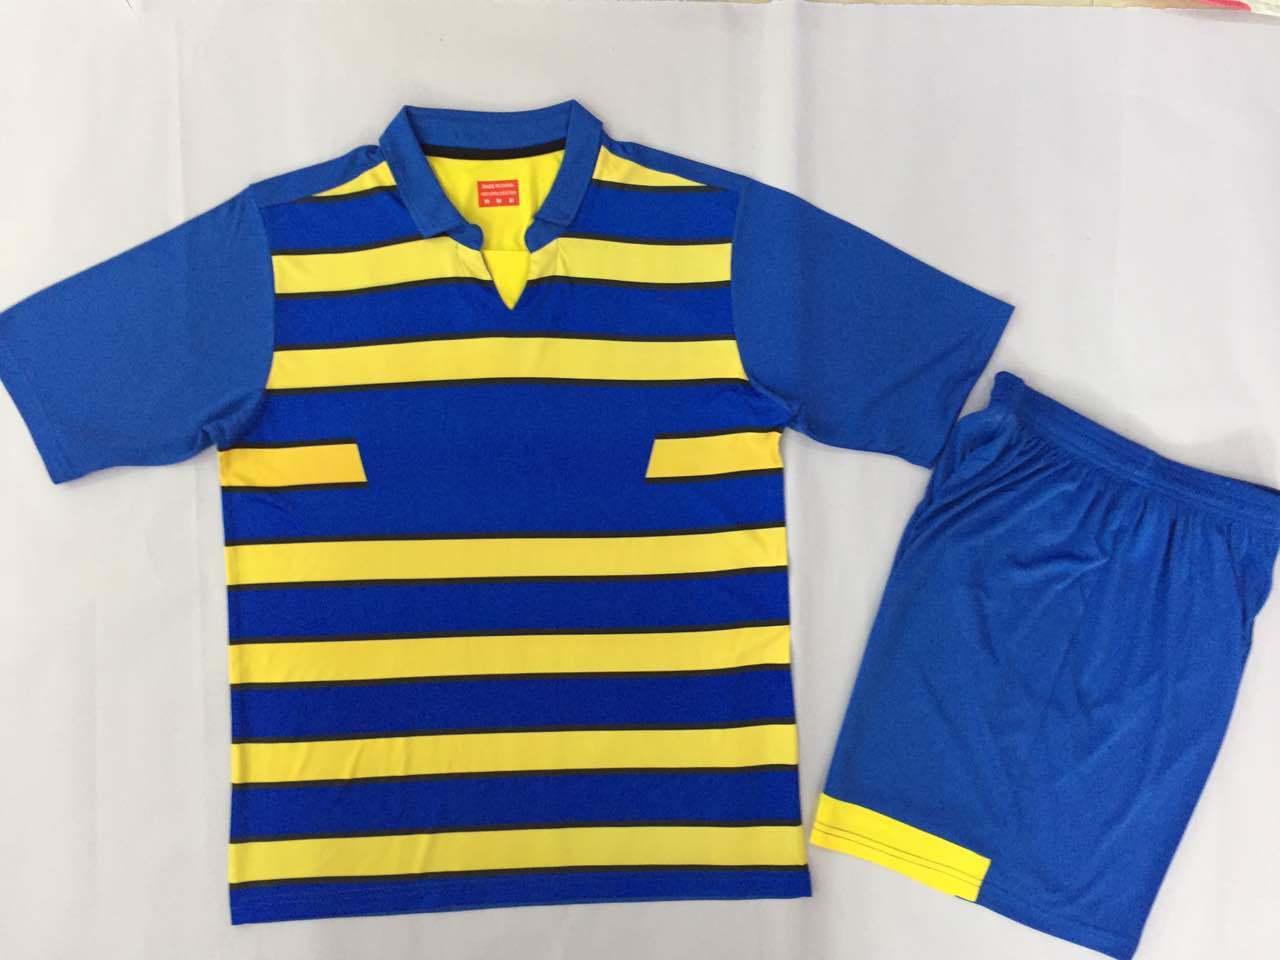 Newest Design Parma Royal Soccer Shirts, Soccer Jersey, Football Jersey